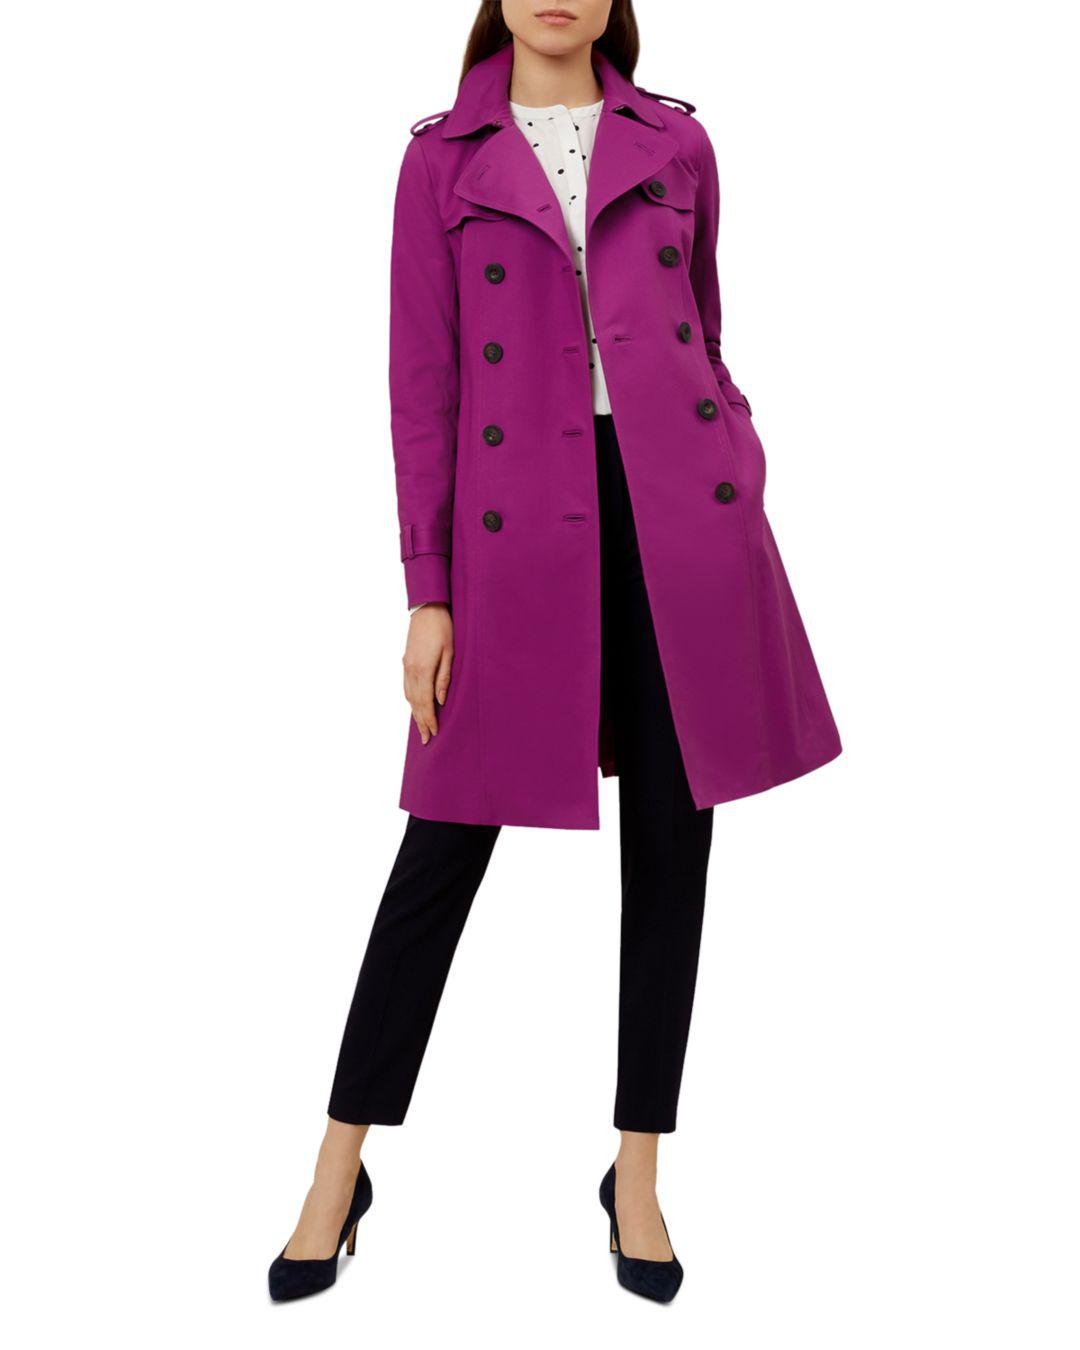 Hobbs Saskia Trench Coat in Purple - Lyst